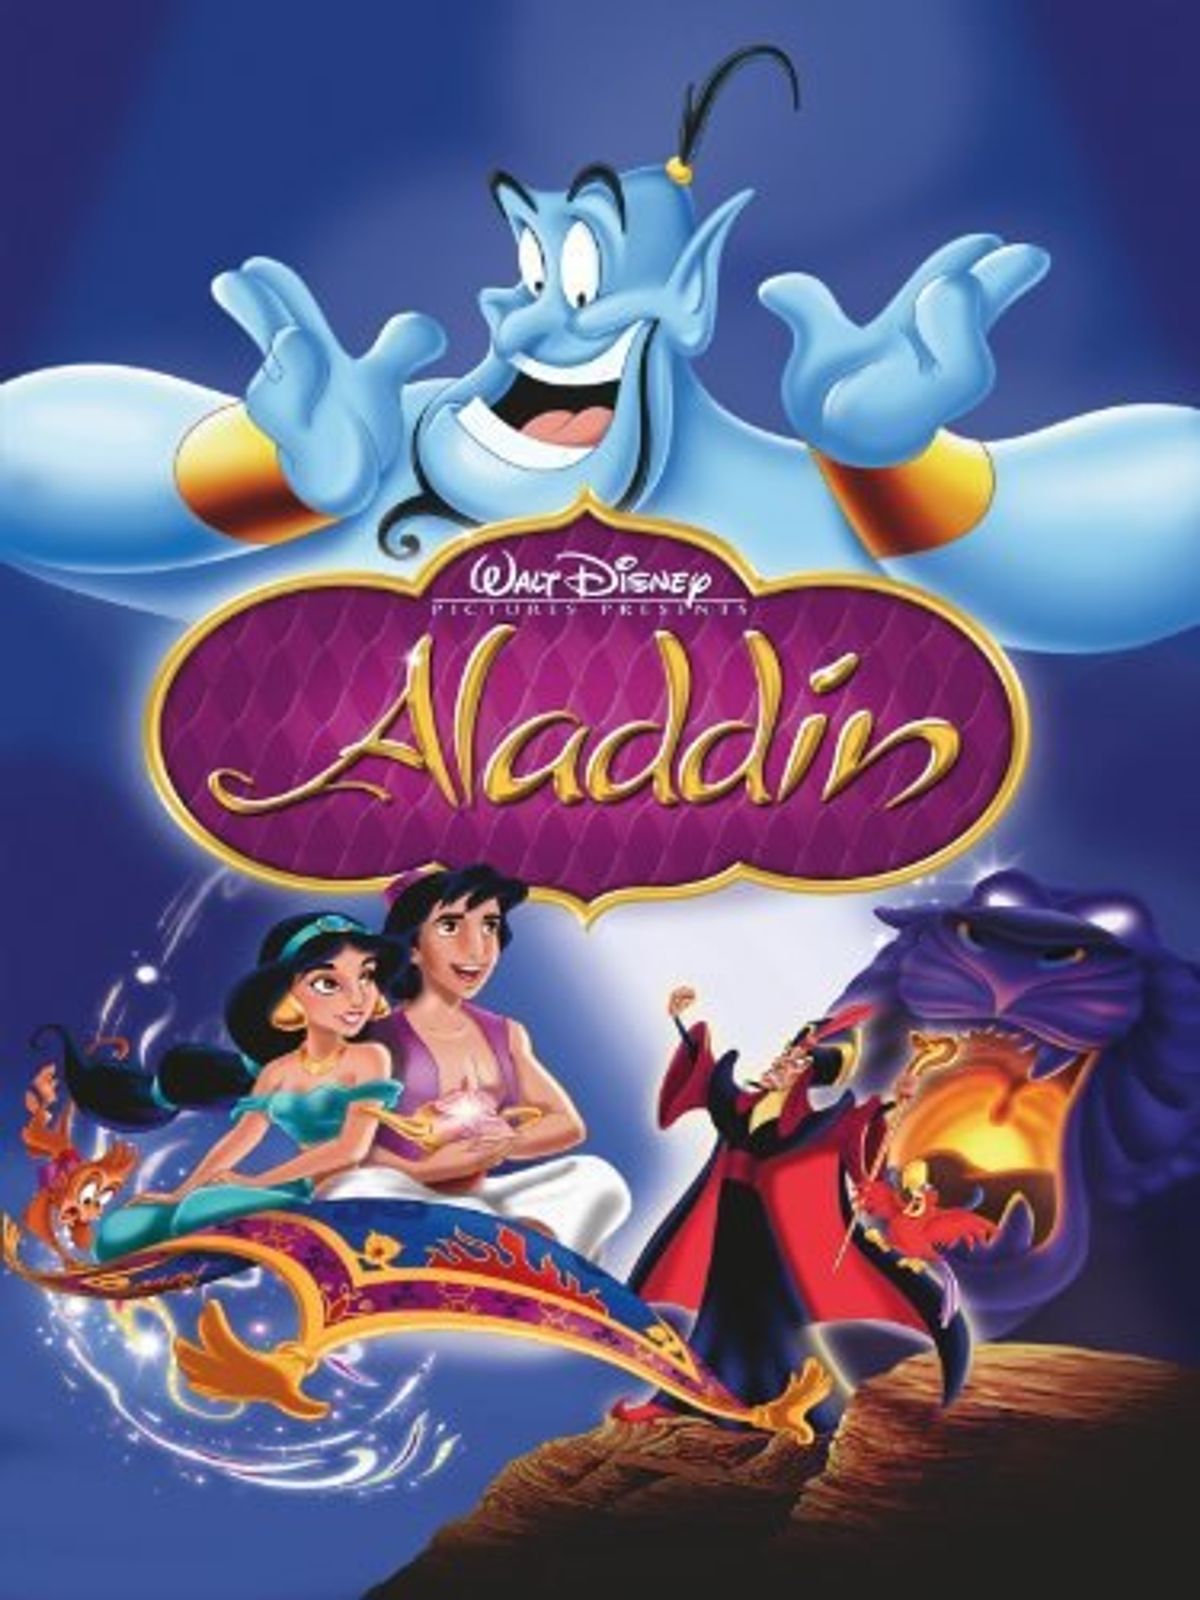 17 Reasons We All Need A Friend Like 'Aladdin's Genie